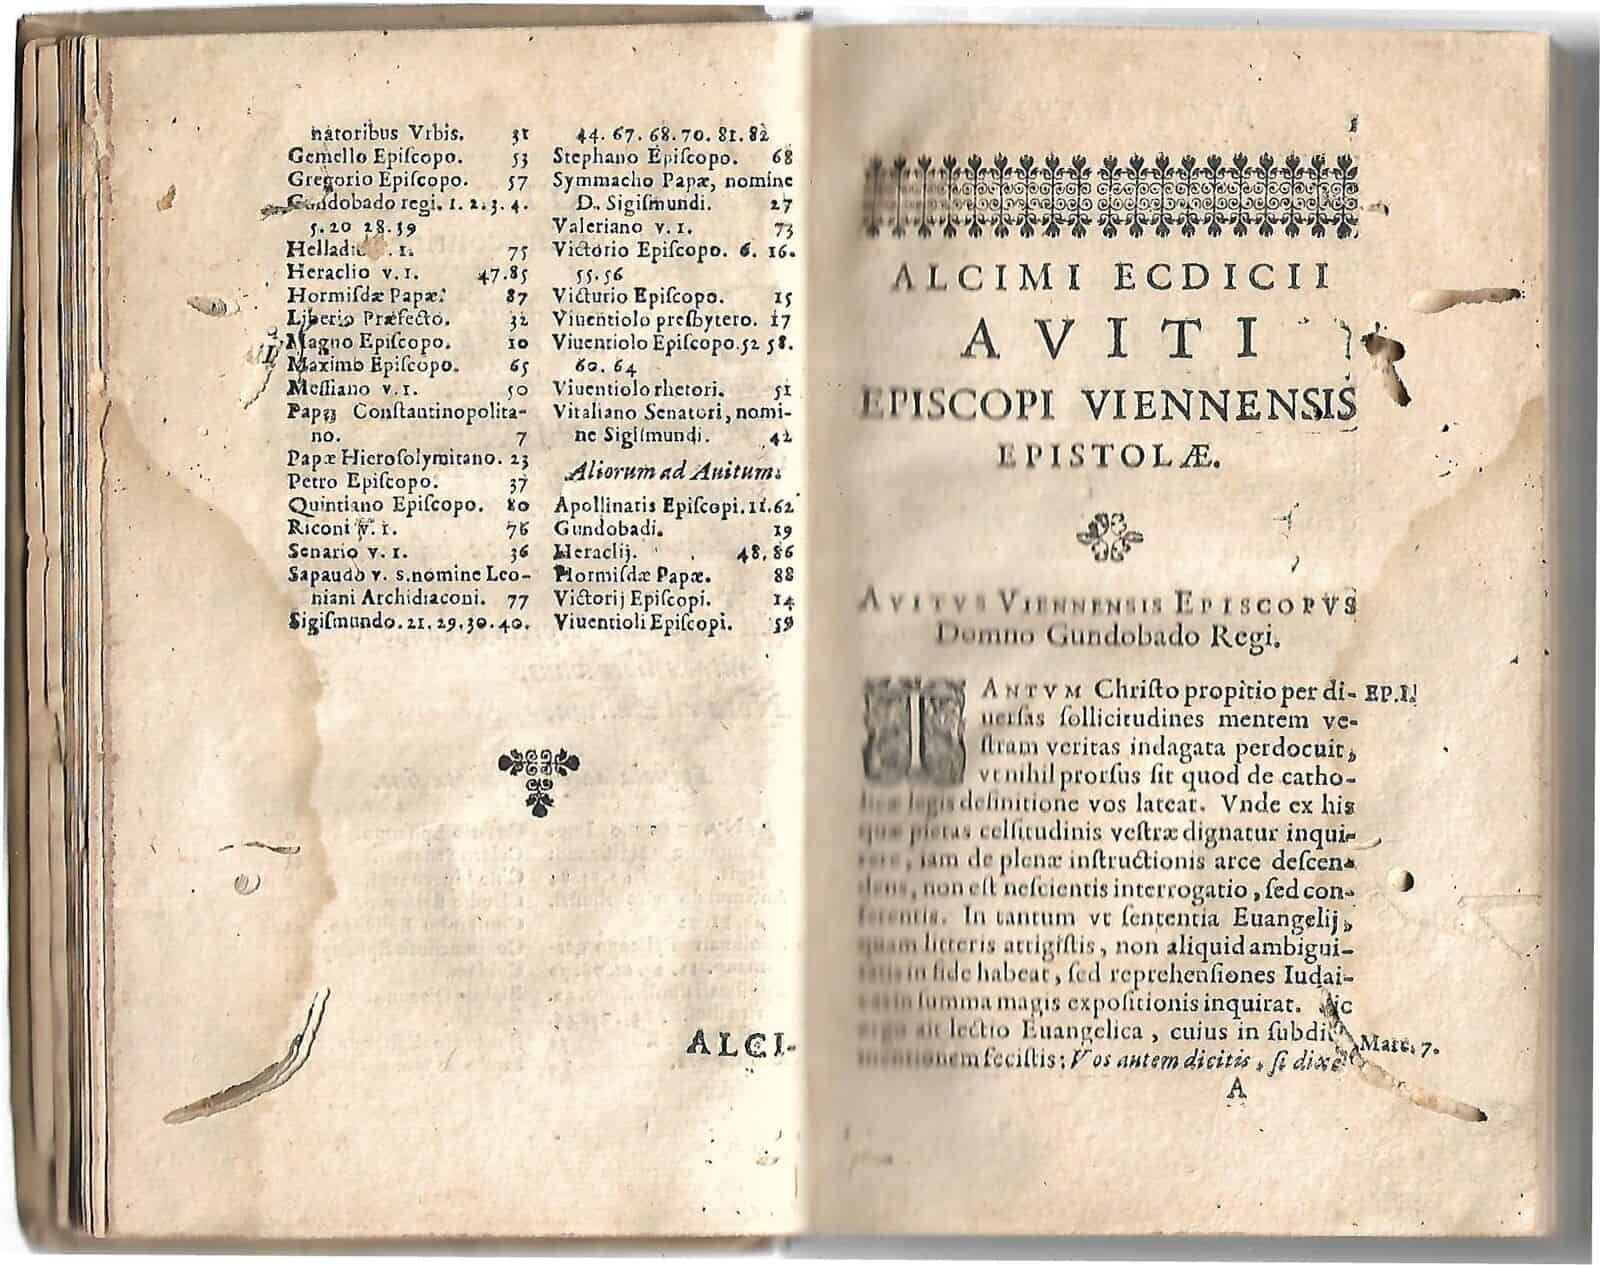 1643 S. Aviti Archiepiscopi Viennensis Opera Poetry - Sigedon